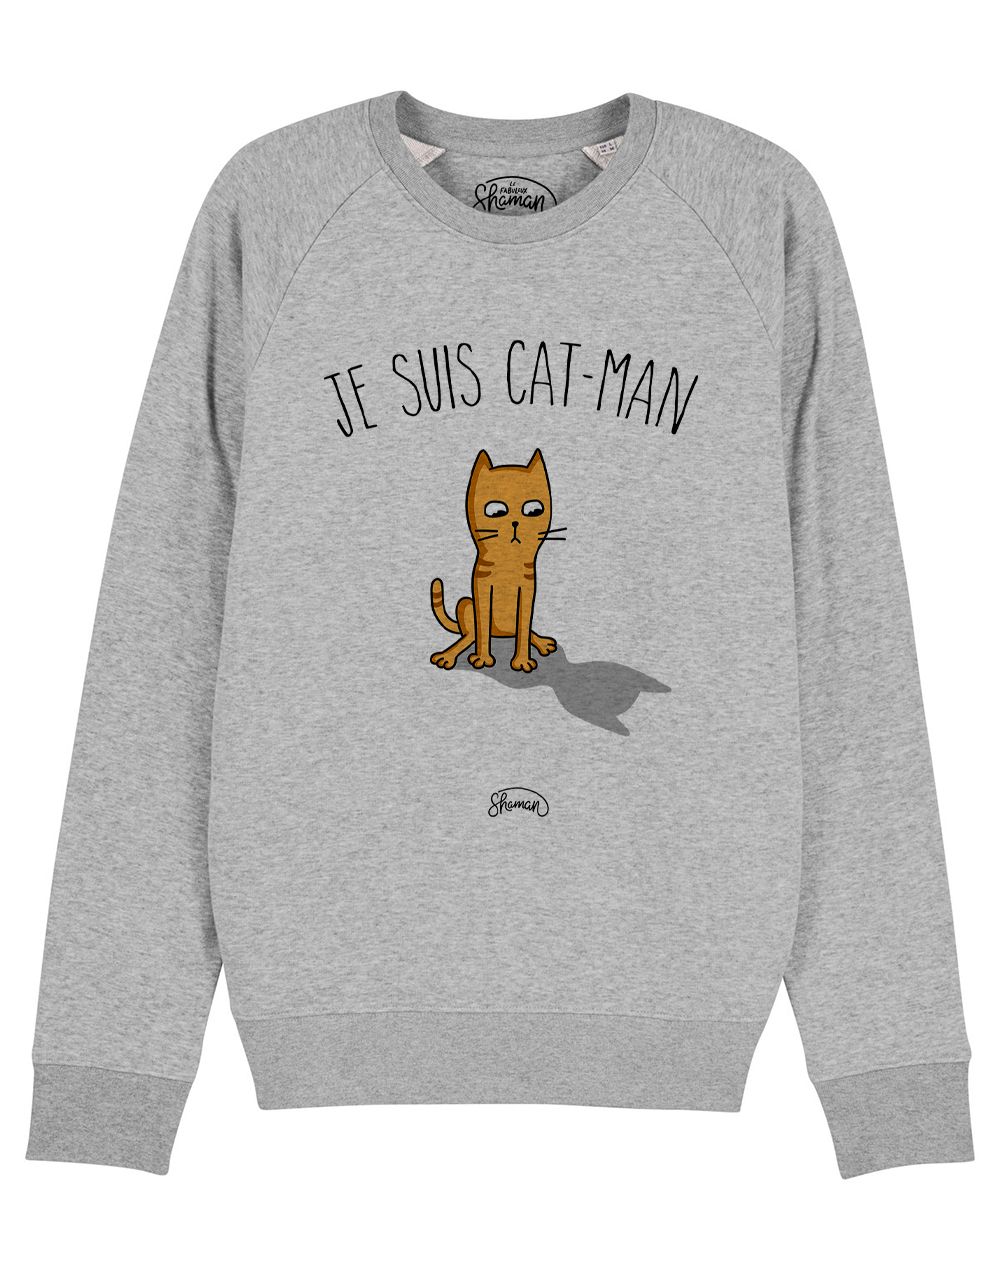 Sweat "Je suis catman"